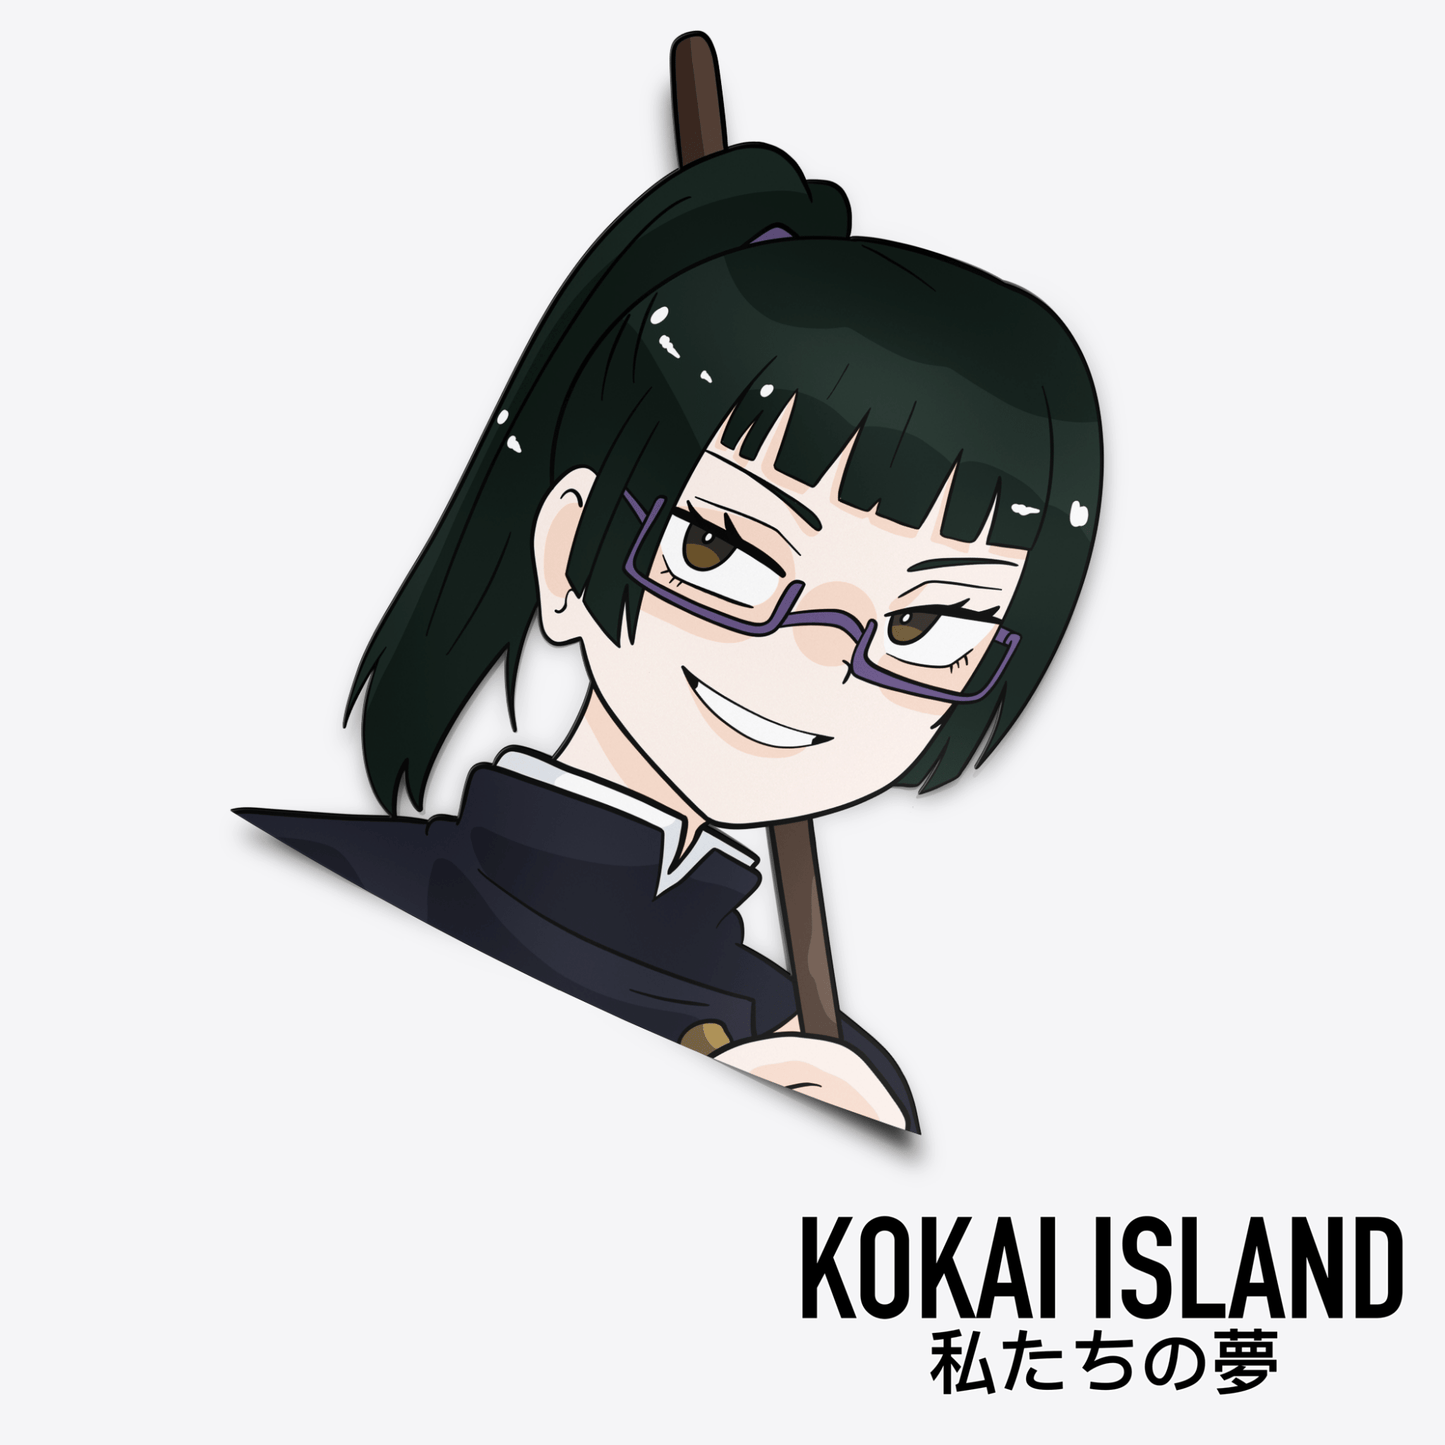 Green Haired Girl DecalDecalKokai Island